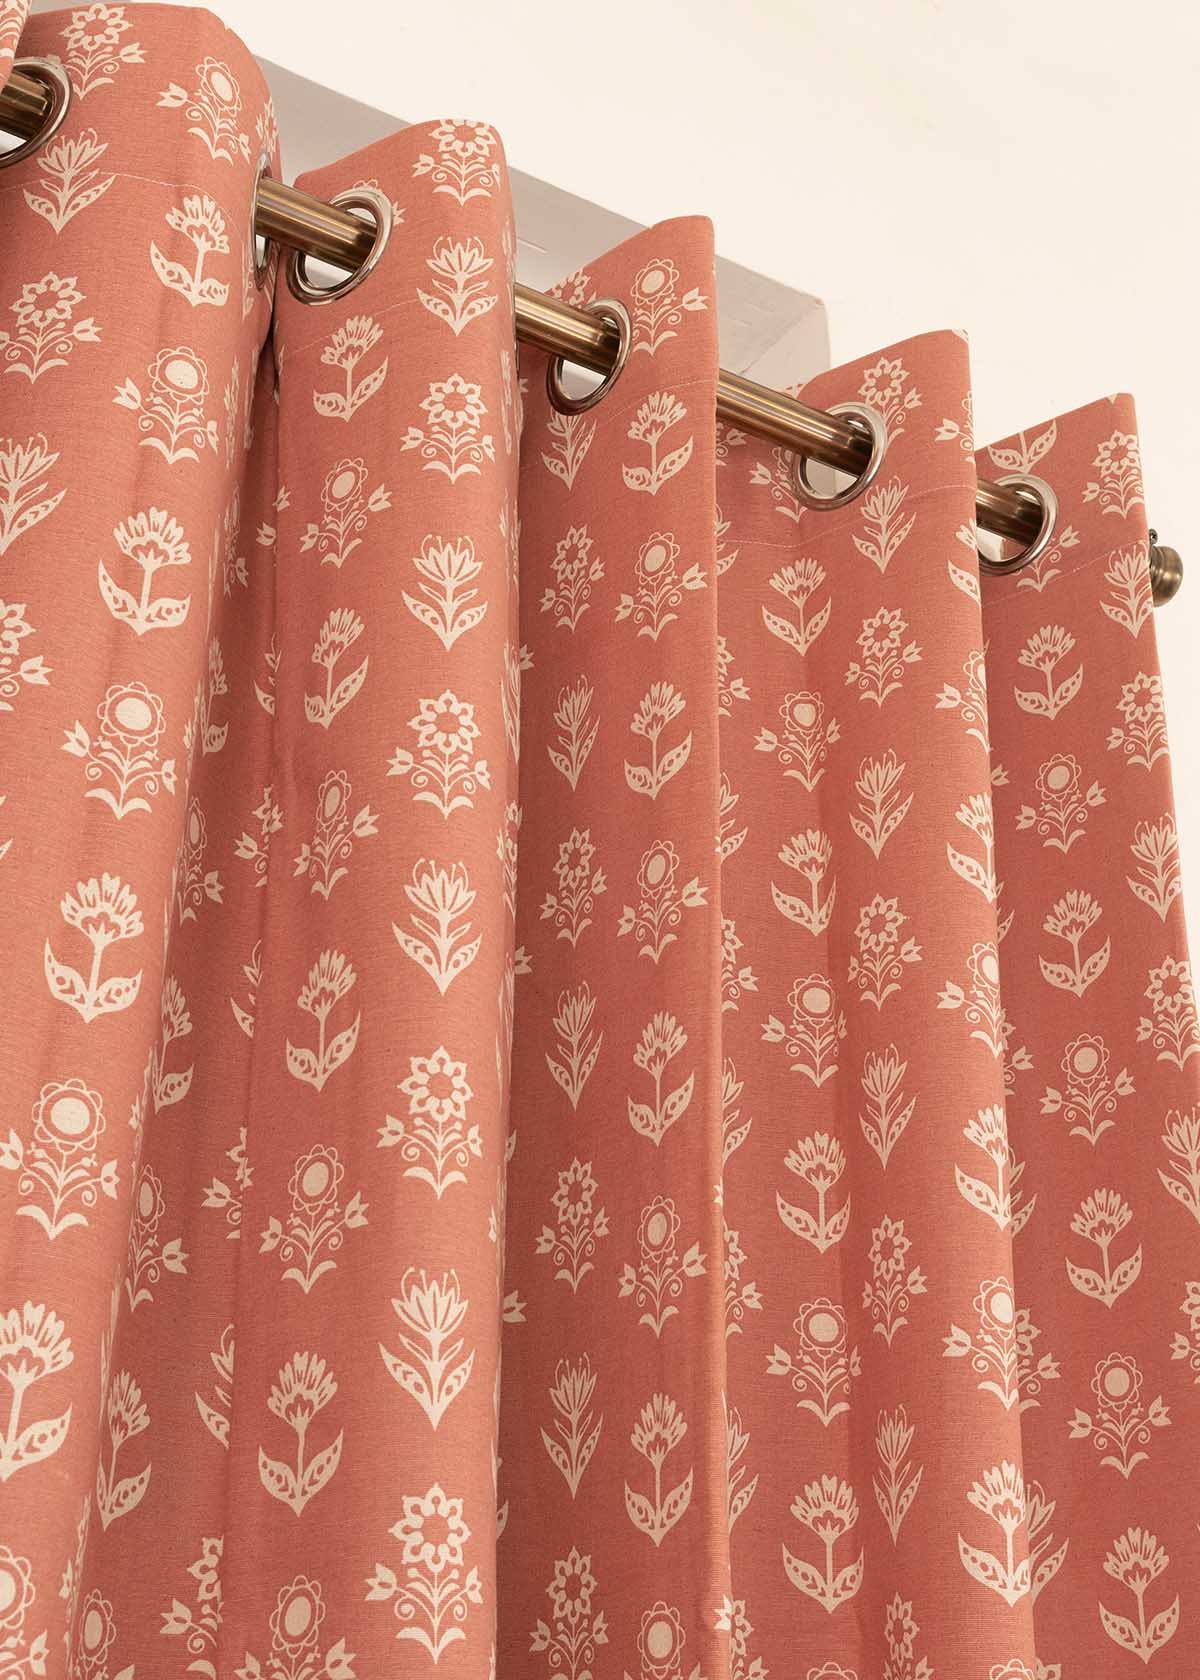 Dahlia 100% Customizable Cotton floral curtain for living room - Room darkening - Rust